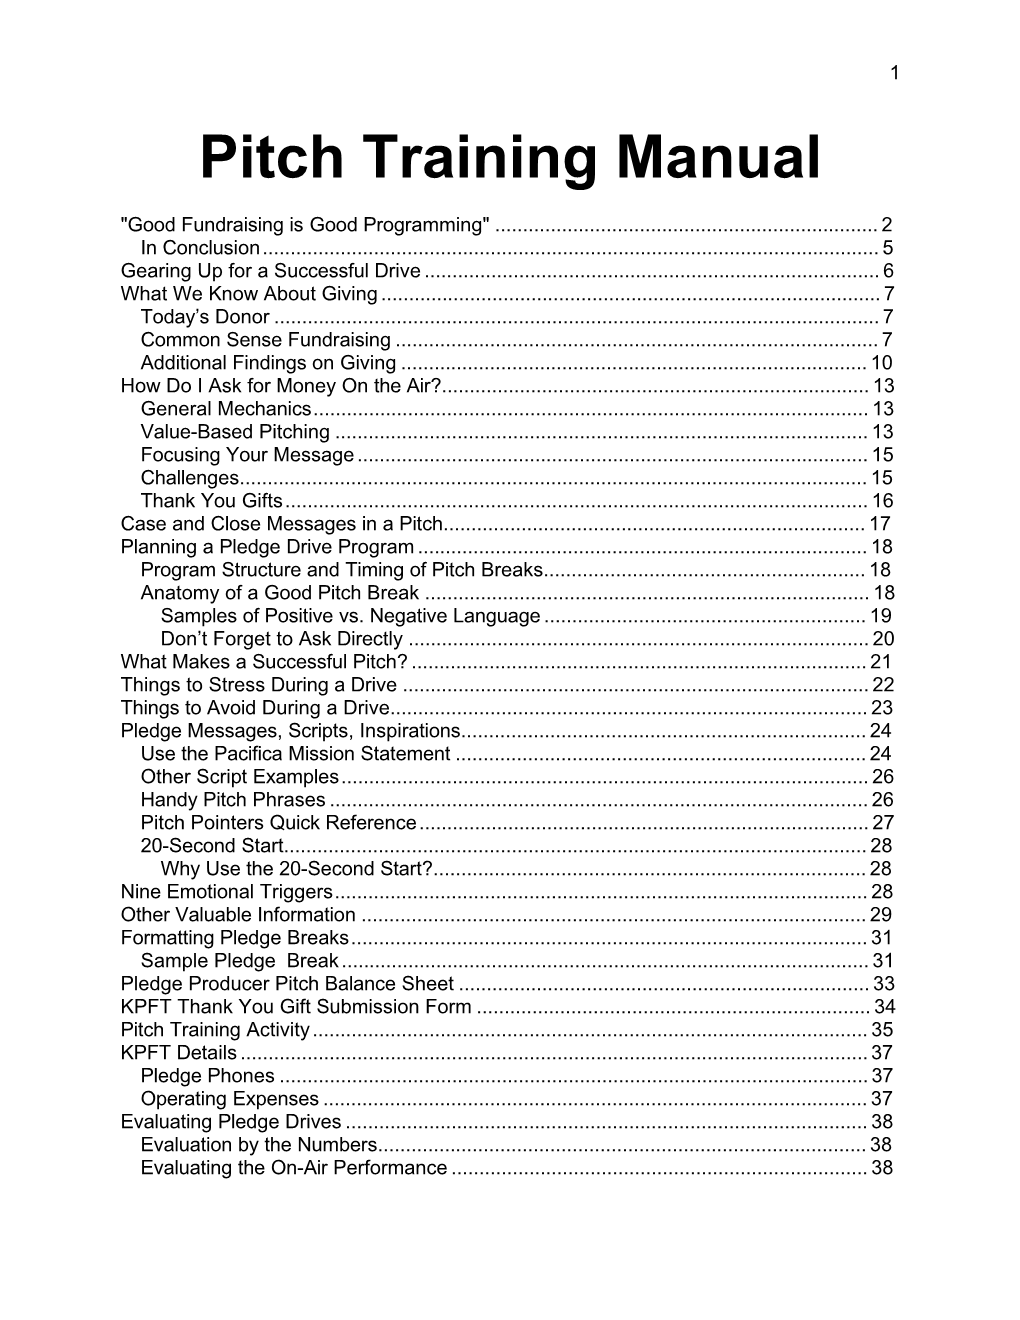 Pitch Training Manual